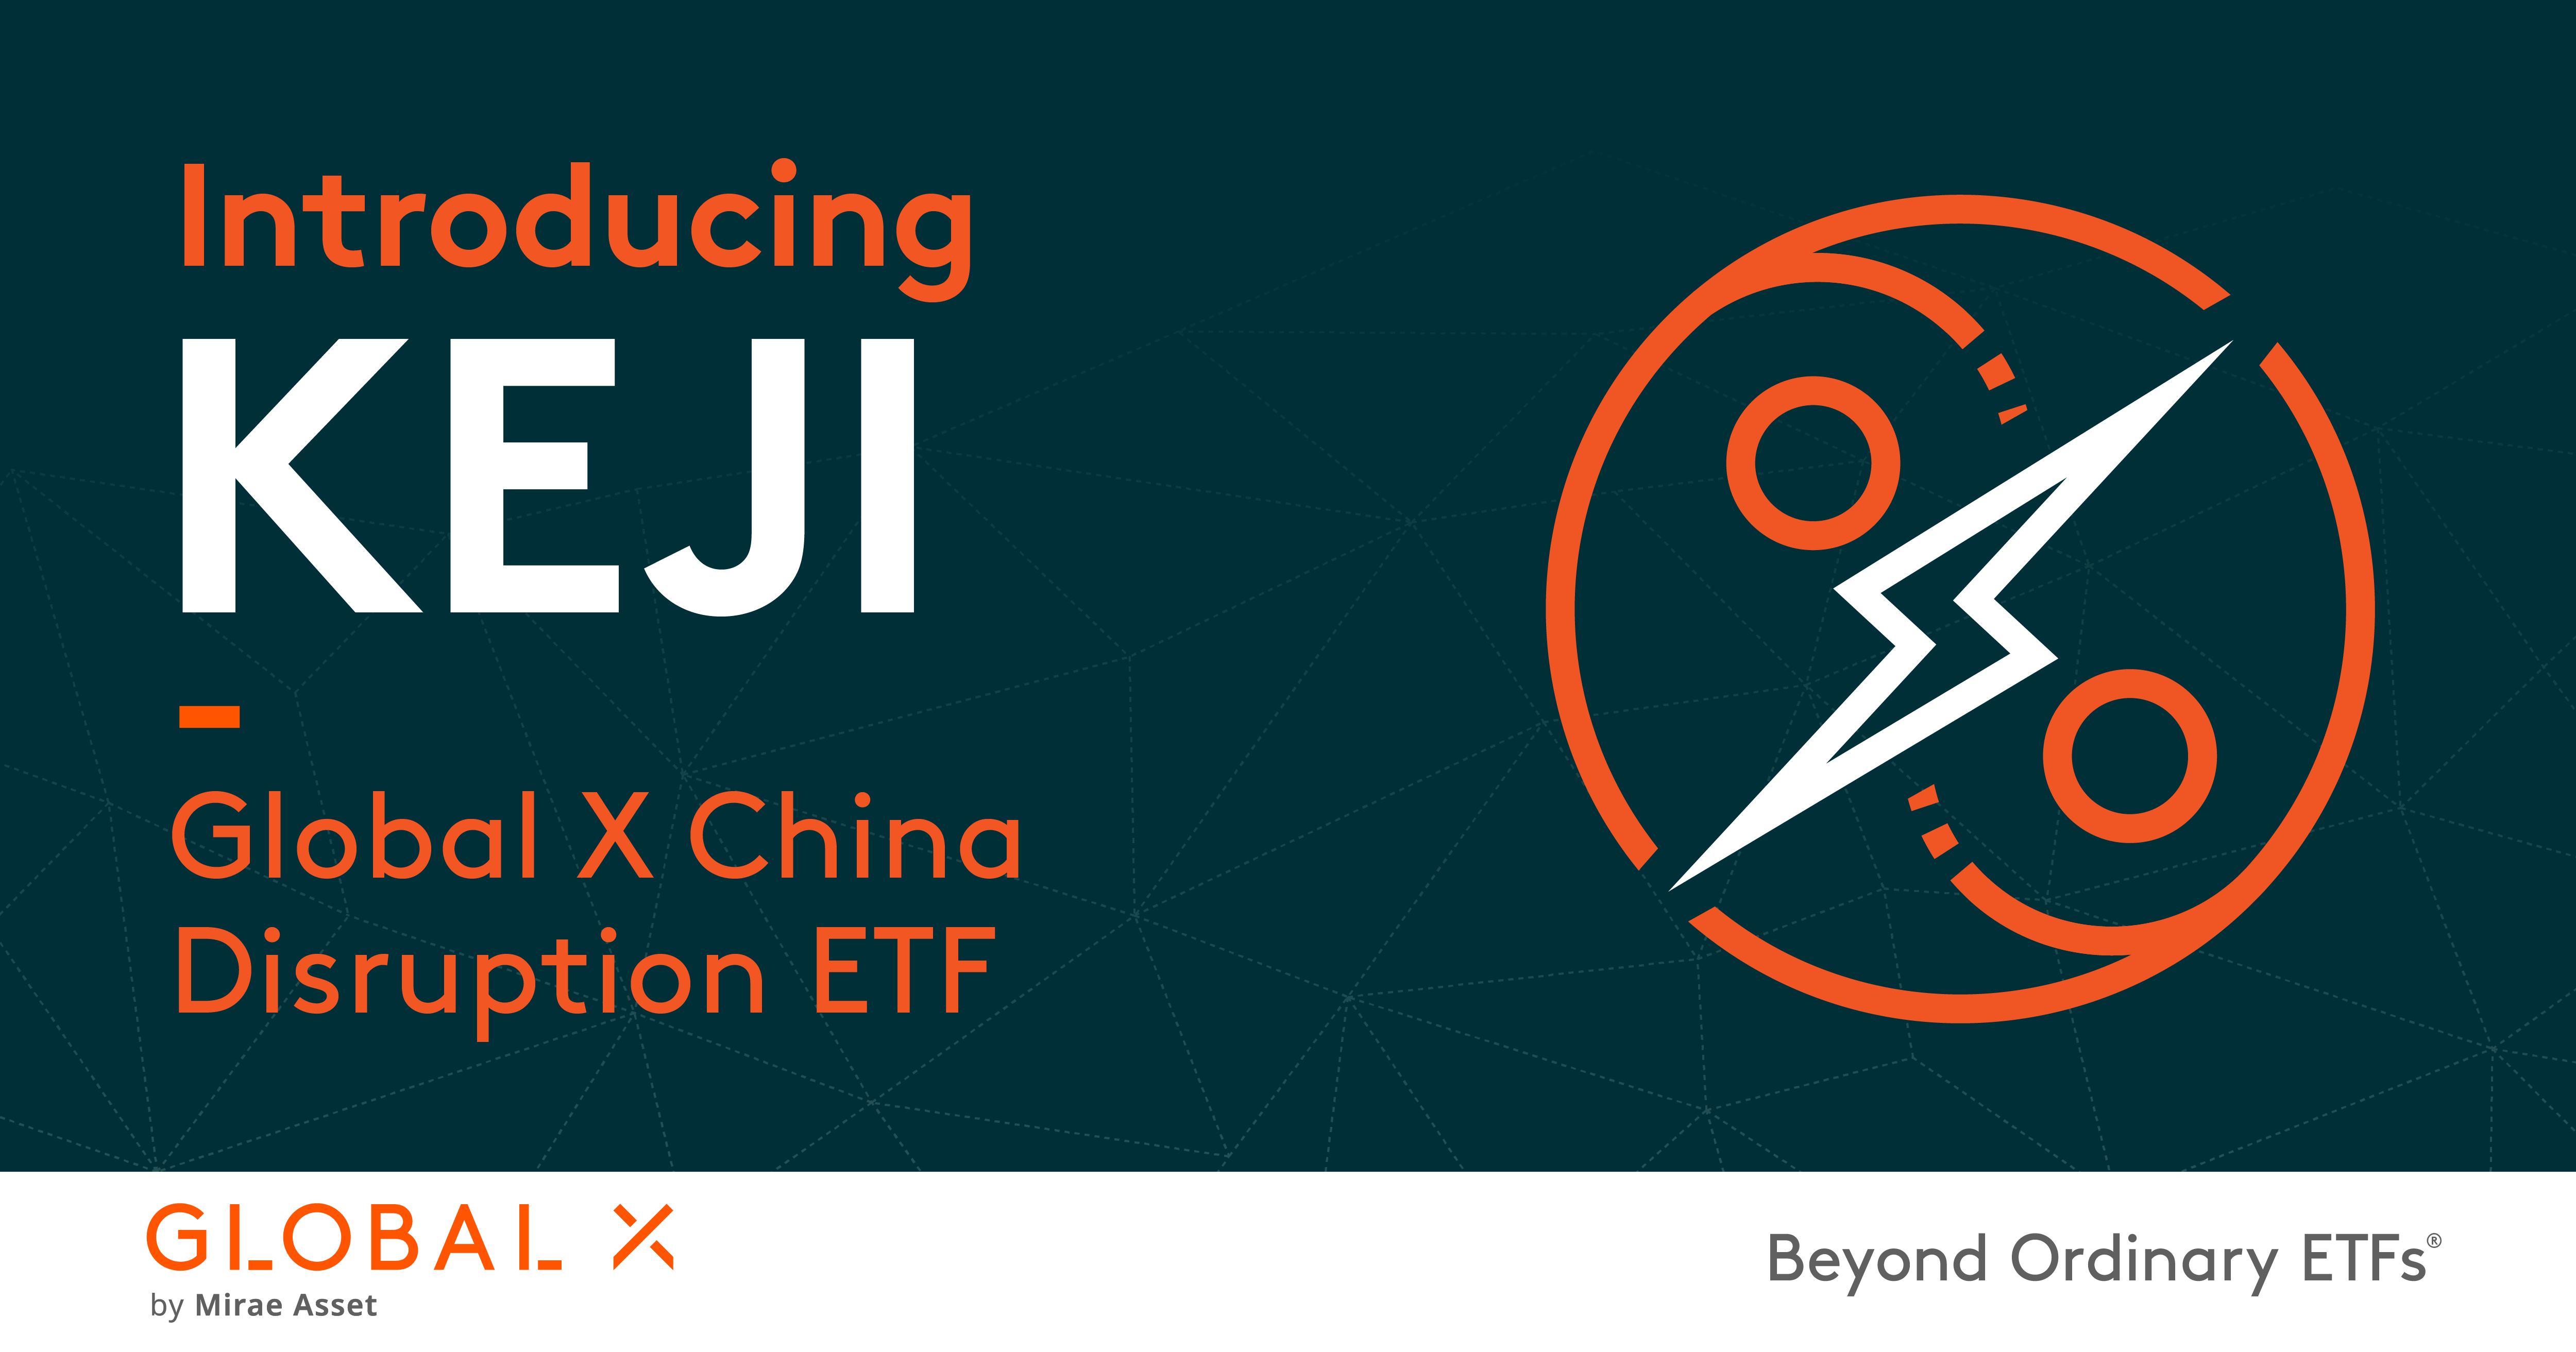 Introducing the Global X China Innovation ETF (KEJI) Global X ETFs